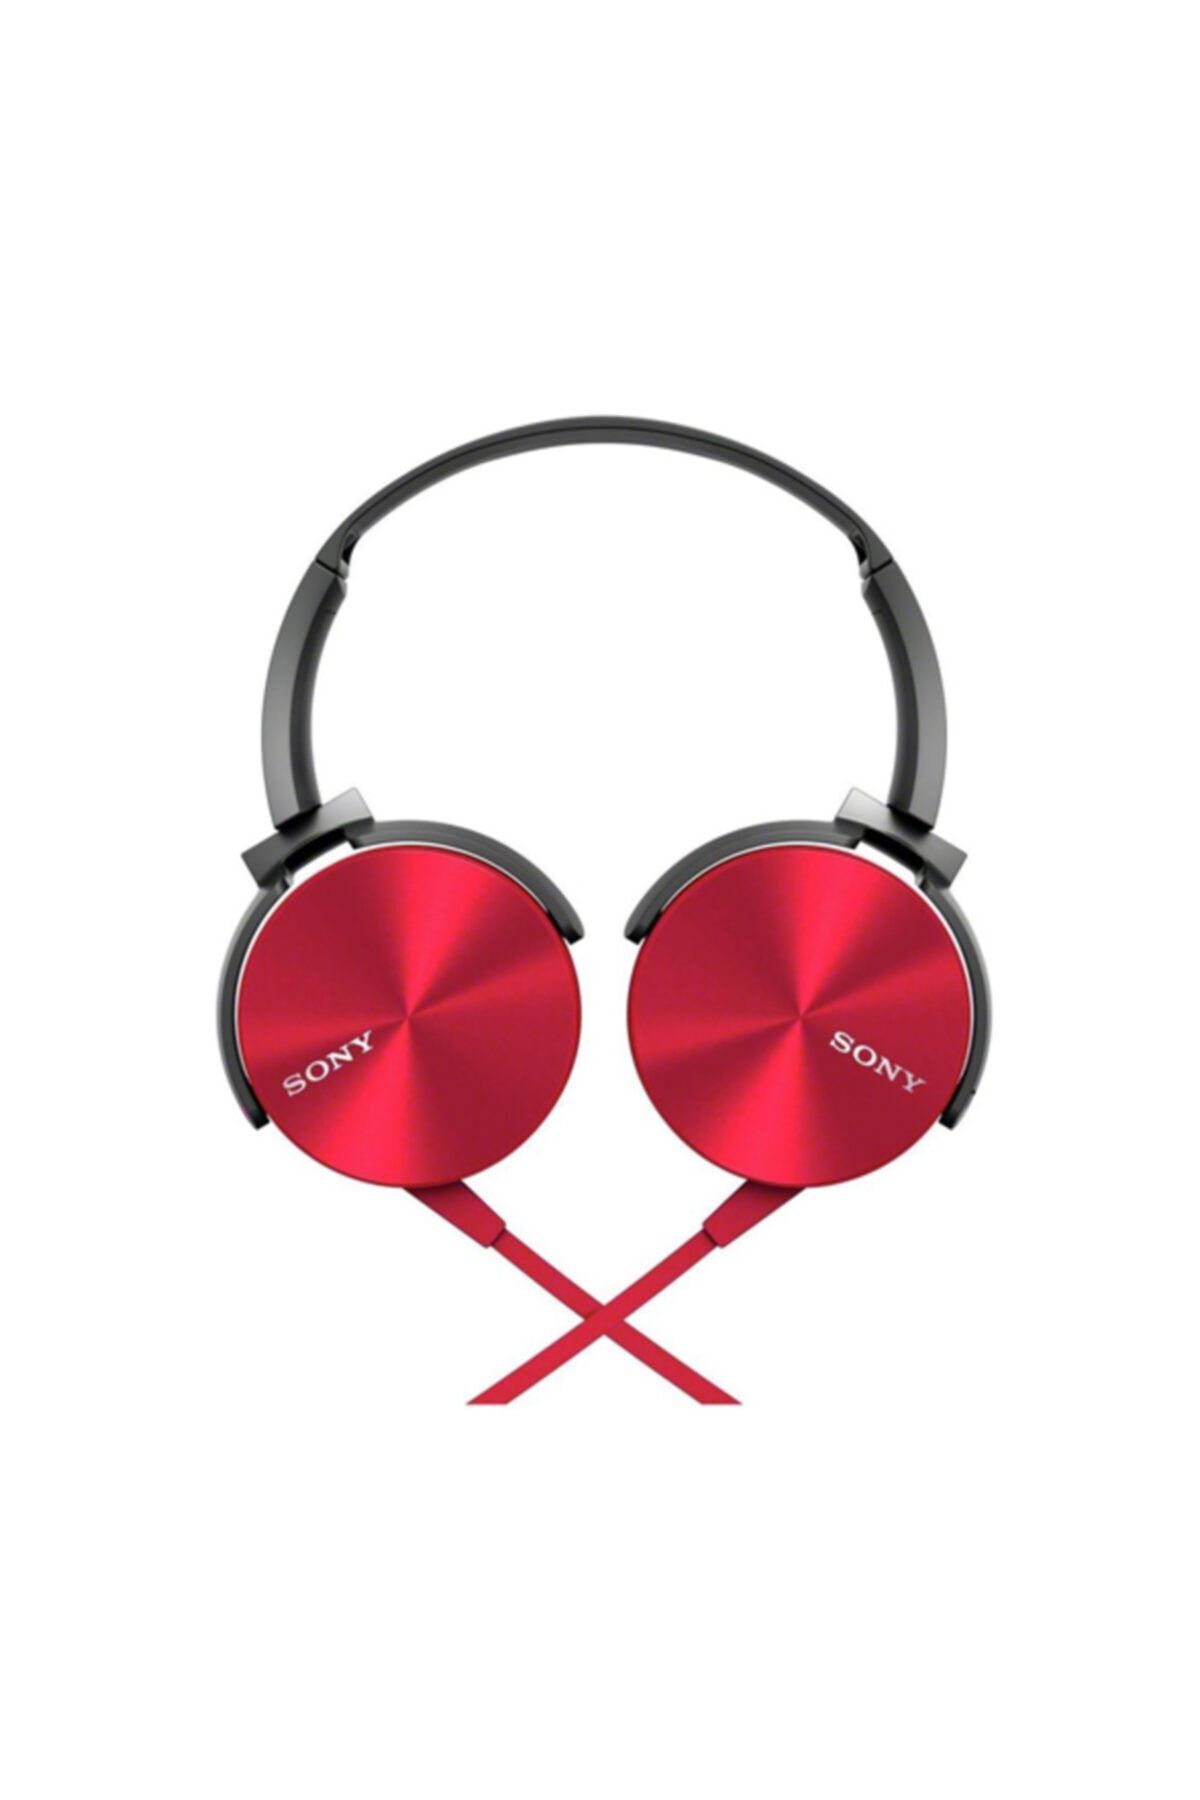 Sony MDR-XB450AP EXTRA BASS ™  Kulaküstü Kulaklık Kırmızı